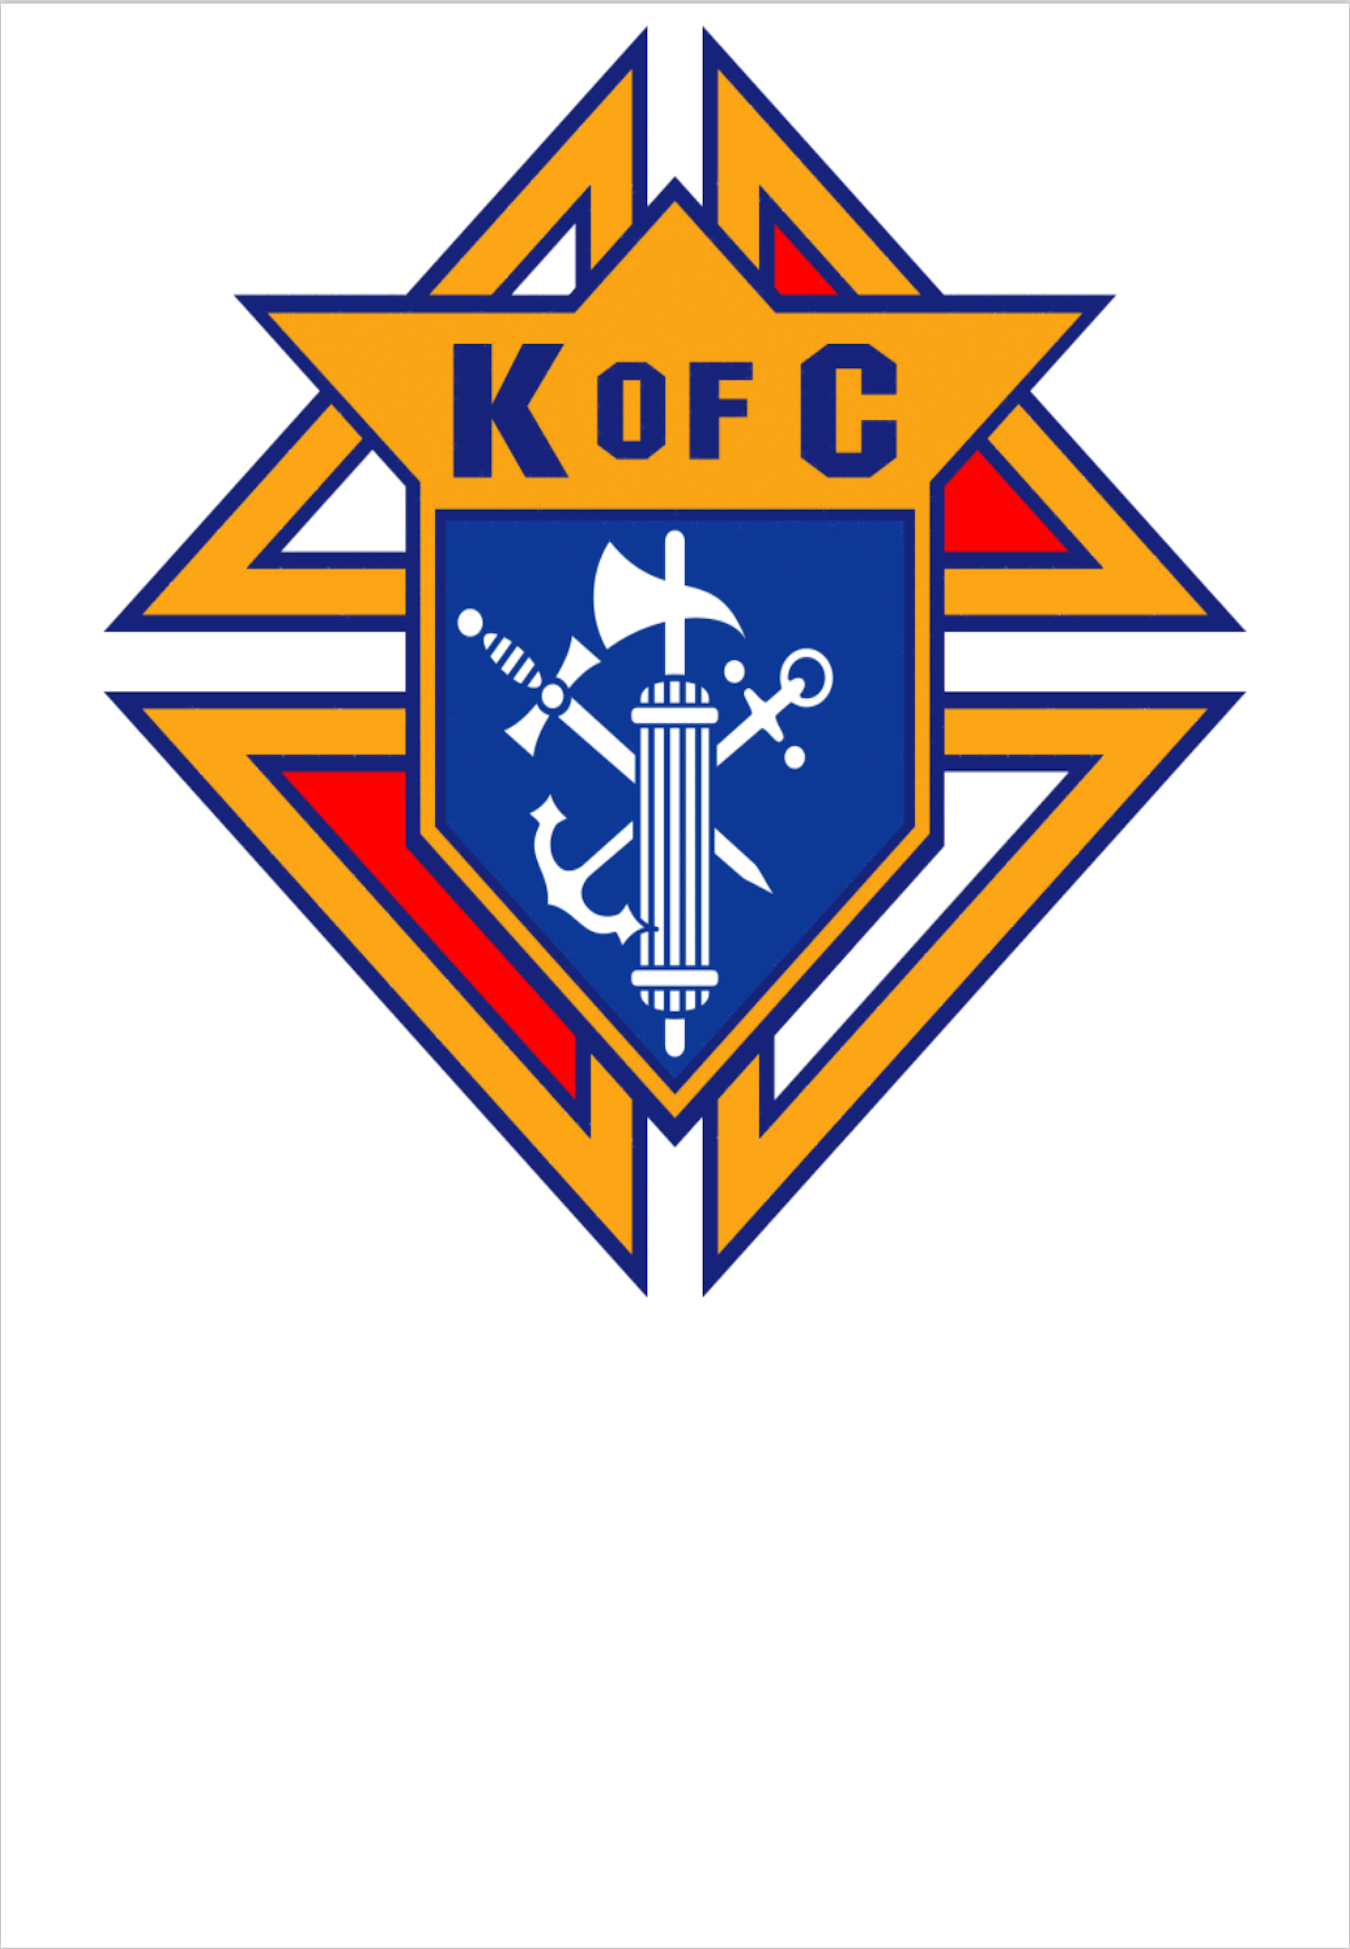 KofC Logo - Council History